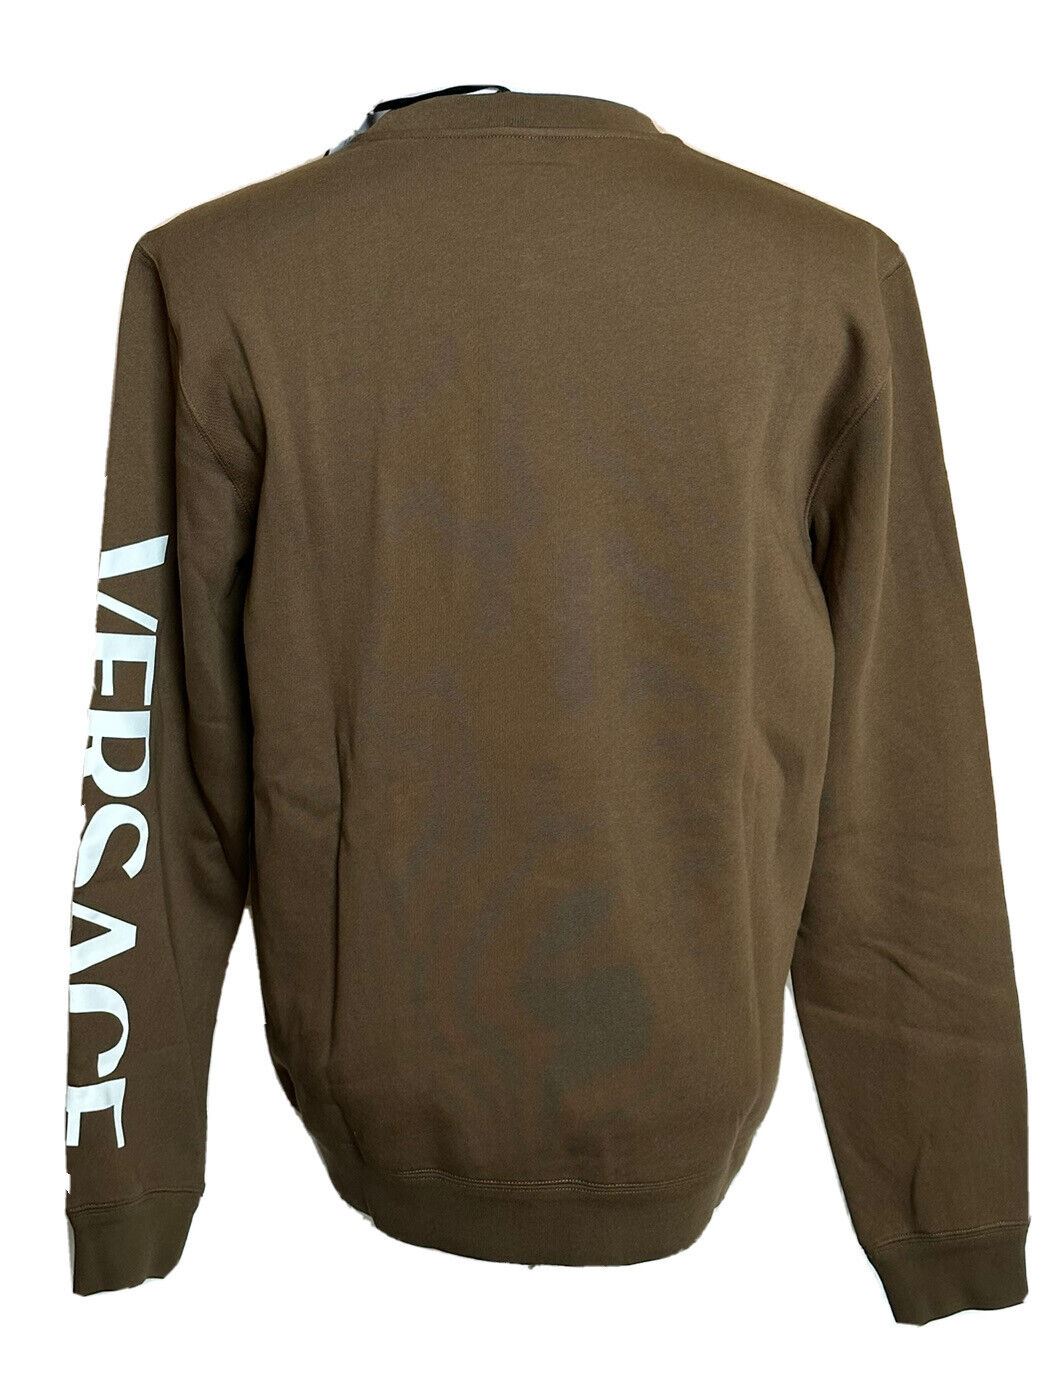 Neu mit Etikett: 850 $ Versace Medusa Renaissance Khaki Baumwoll-Sweatshirt XL 1008282 